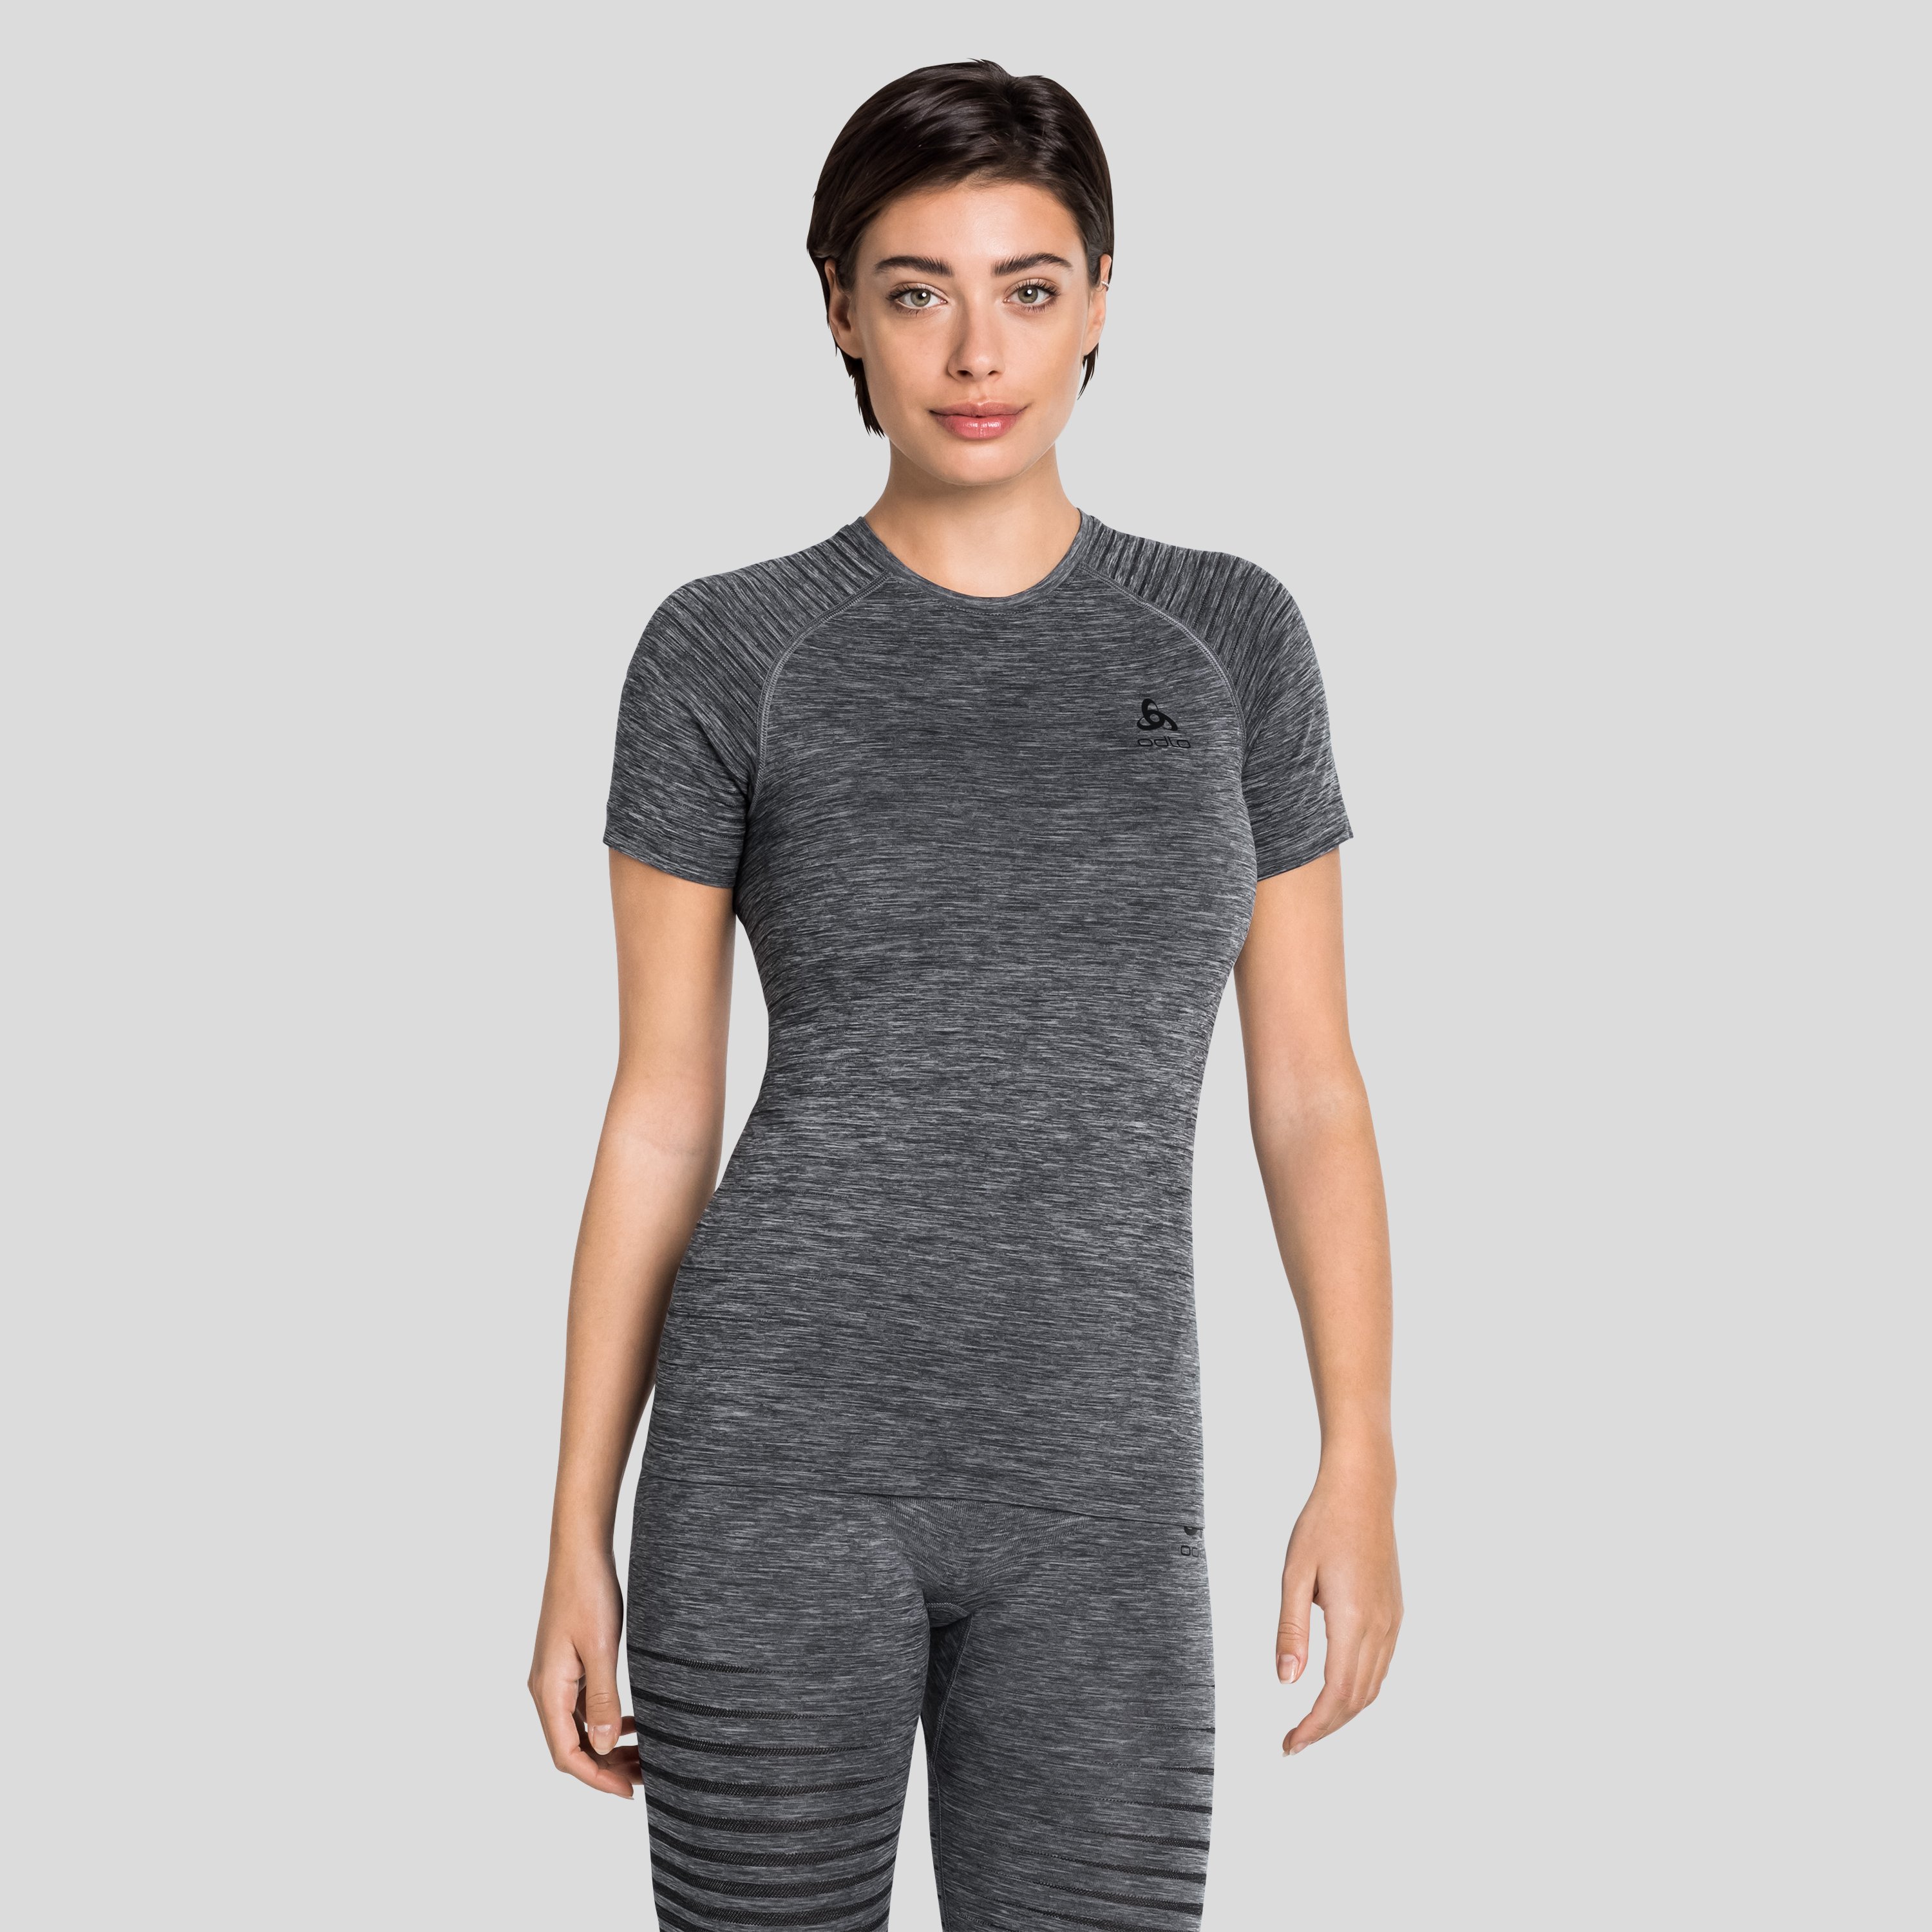 ODLO Performance Light Base Layer T-Shirt für Damen, XS, grau